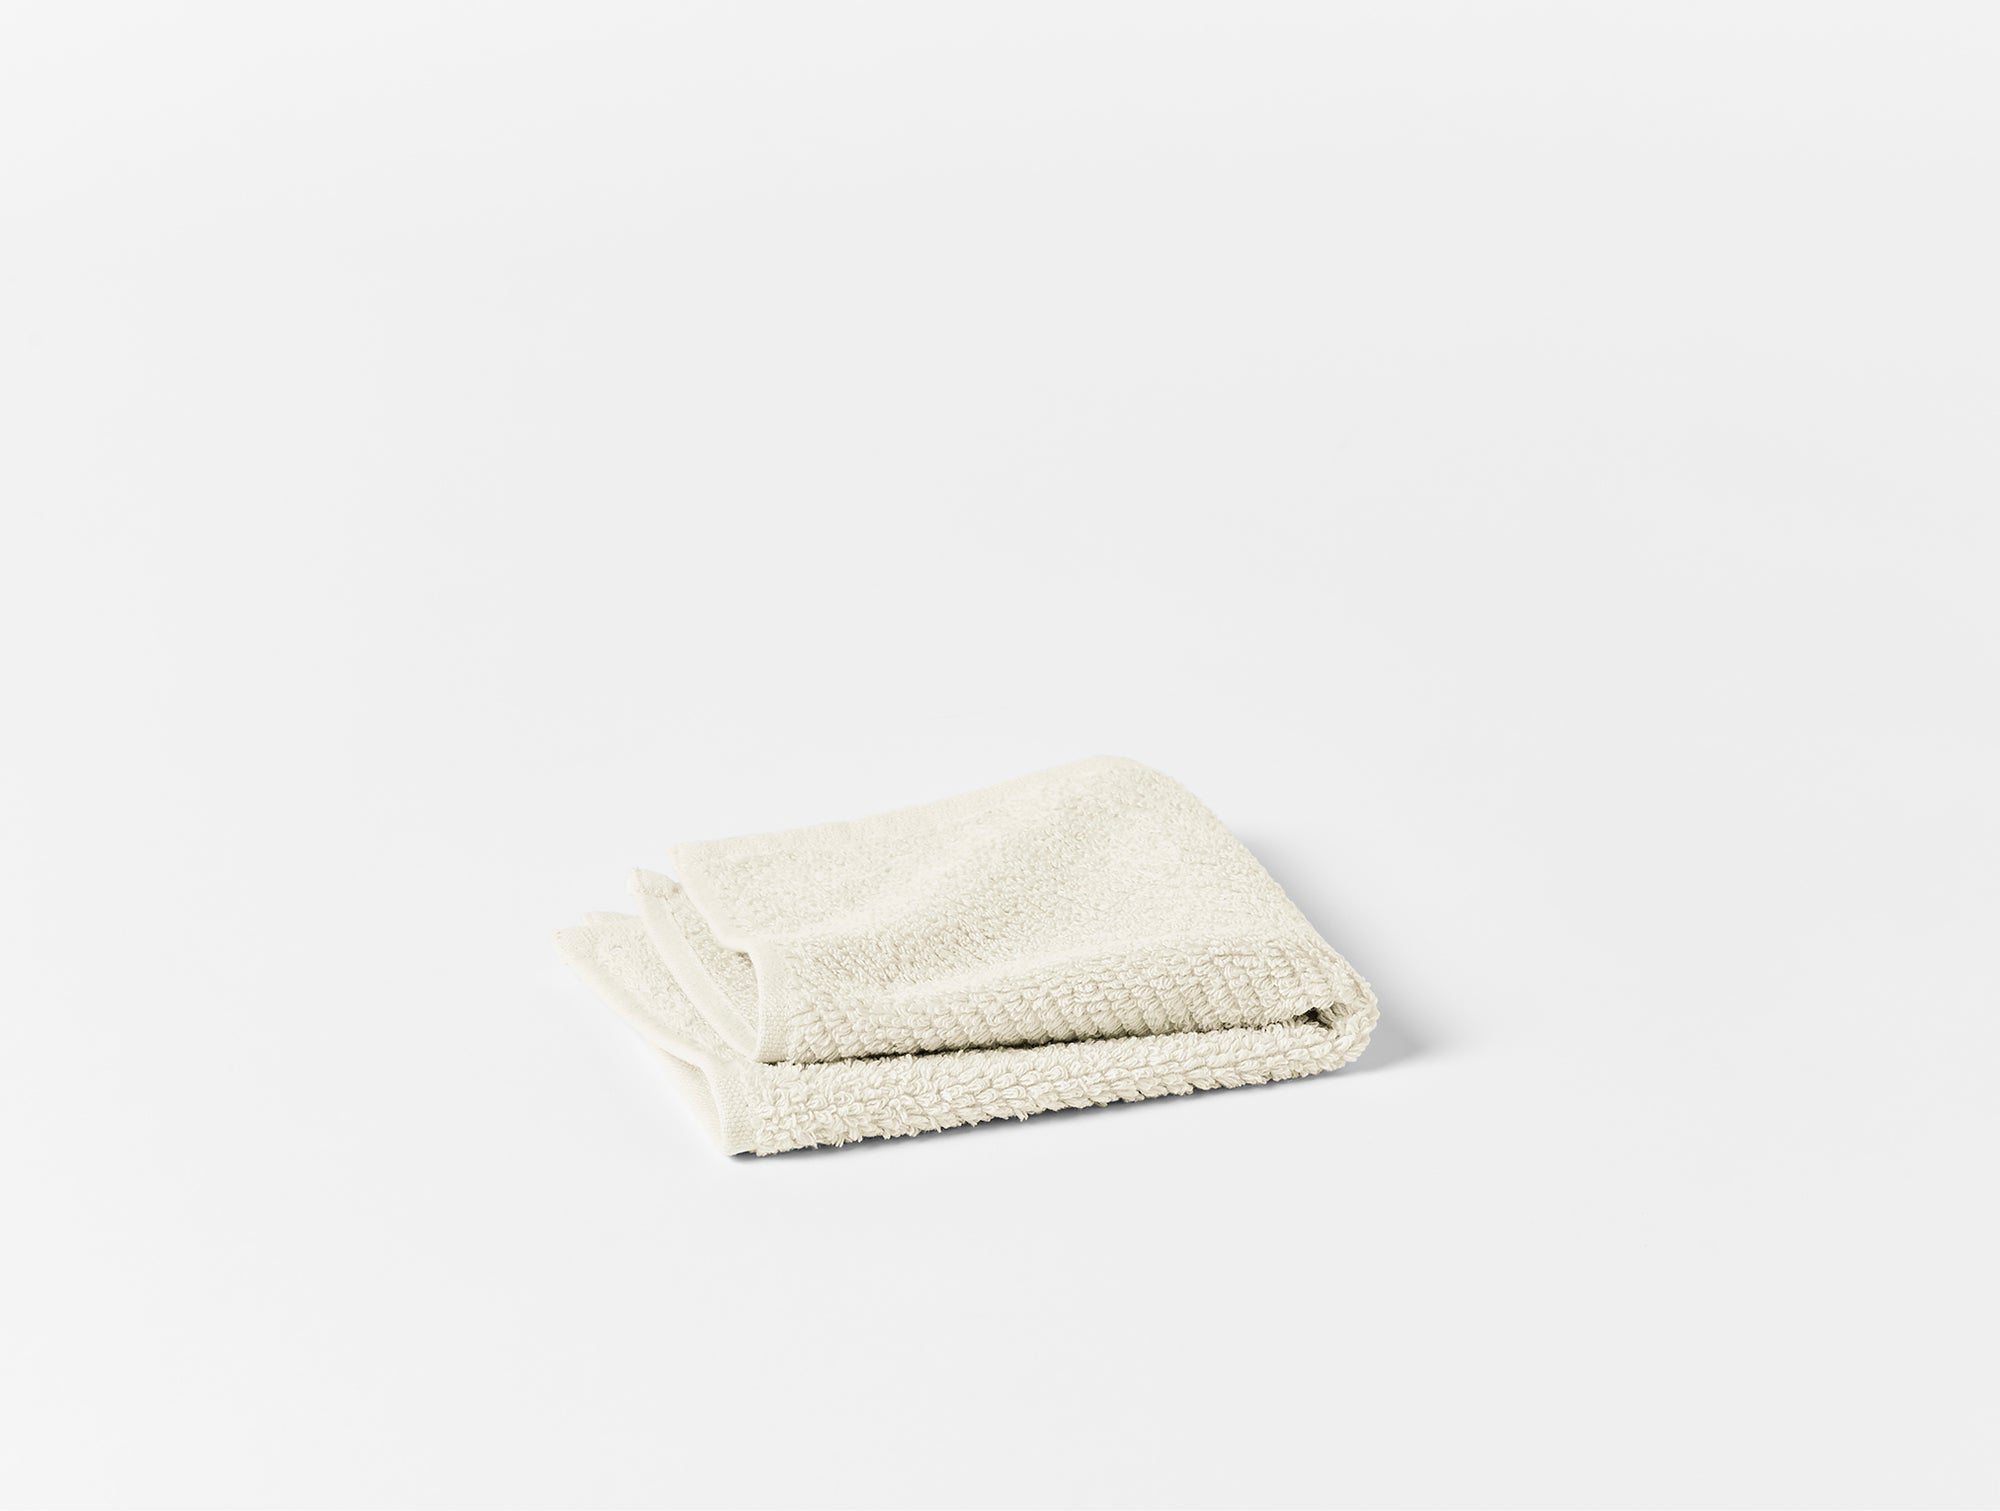 Coyuchi Air Weight Organic Towels - Set of 4 Bath Towel Alpine White